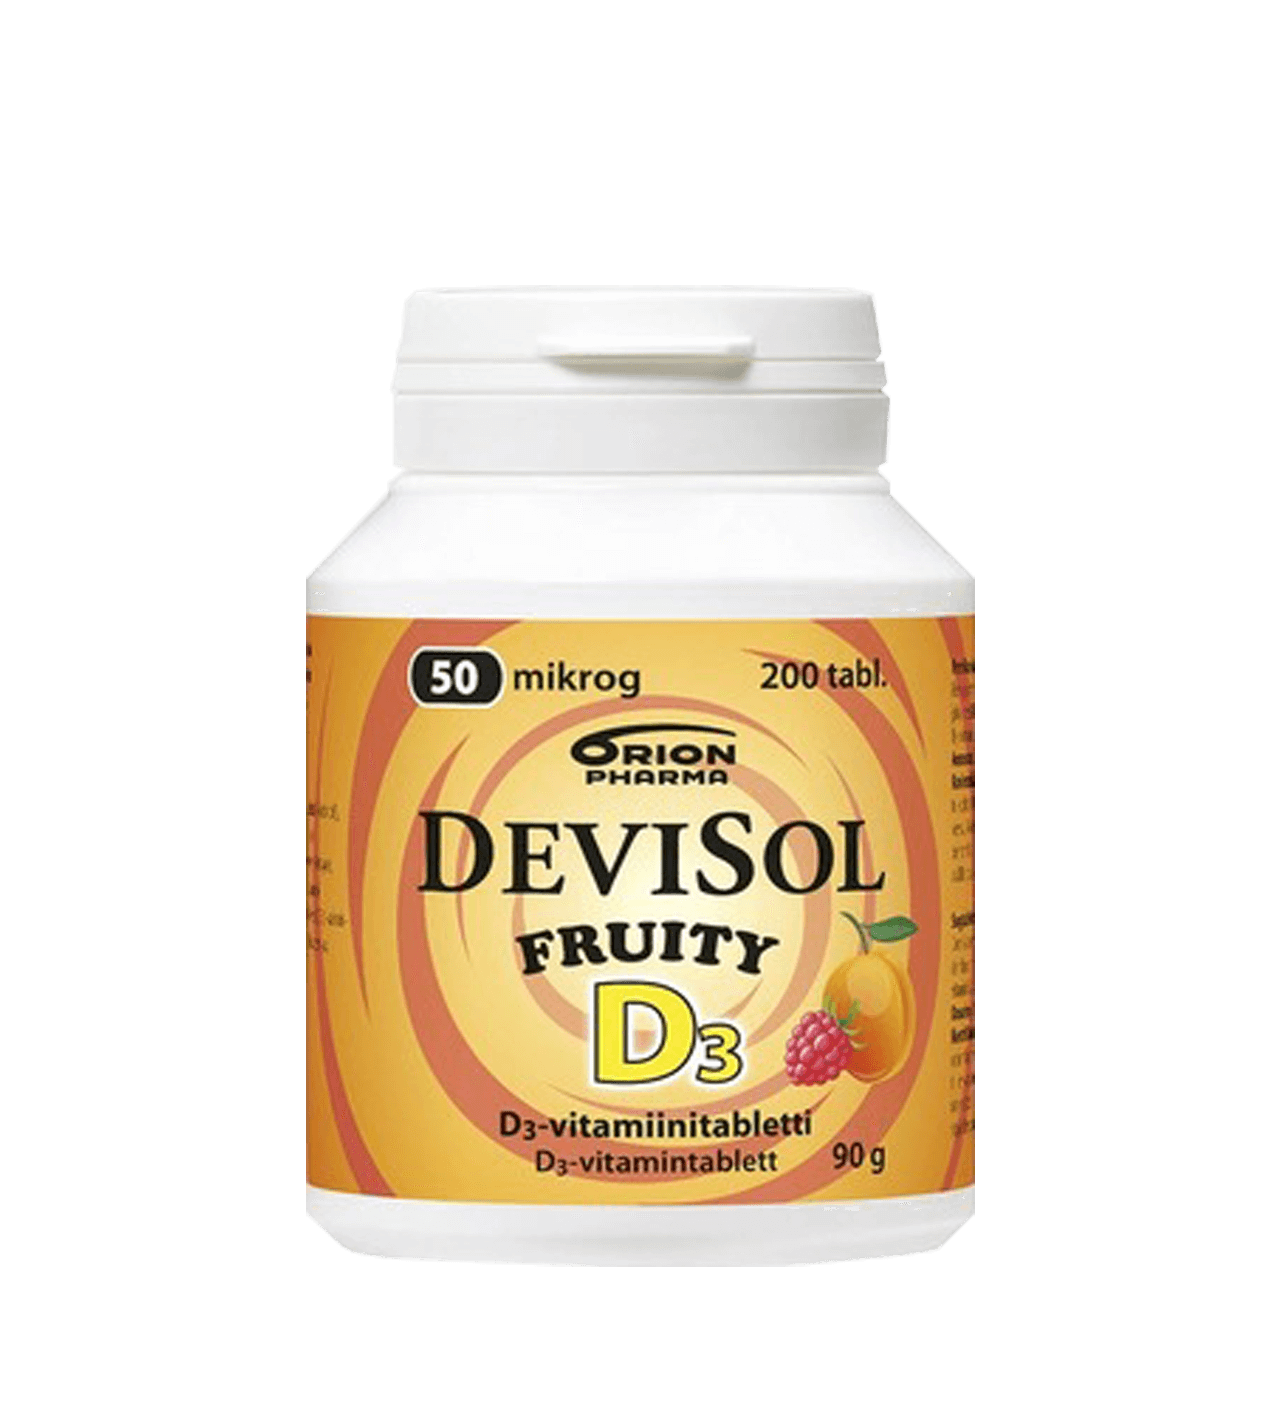 Drops d3. Devisol d3. Витамин д3 девисол. Devisol Drops d3 50 mikrog. Витамины девисол д3 из Финляндии.